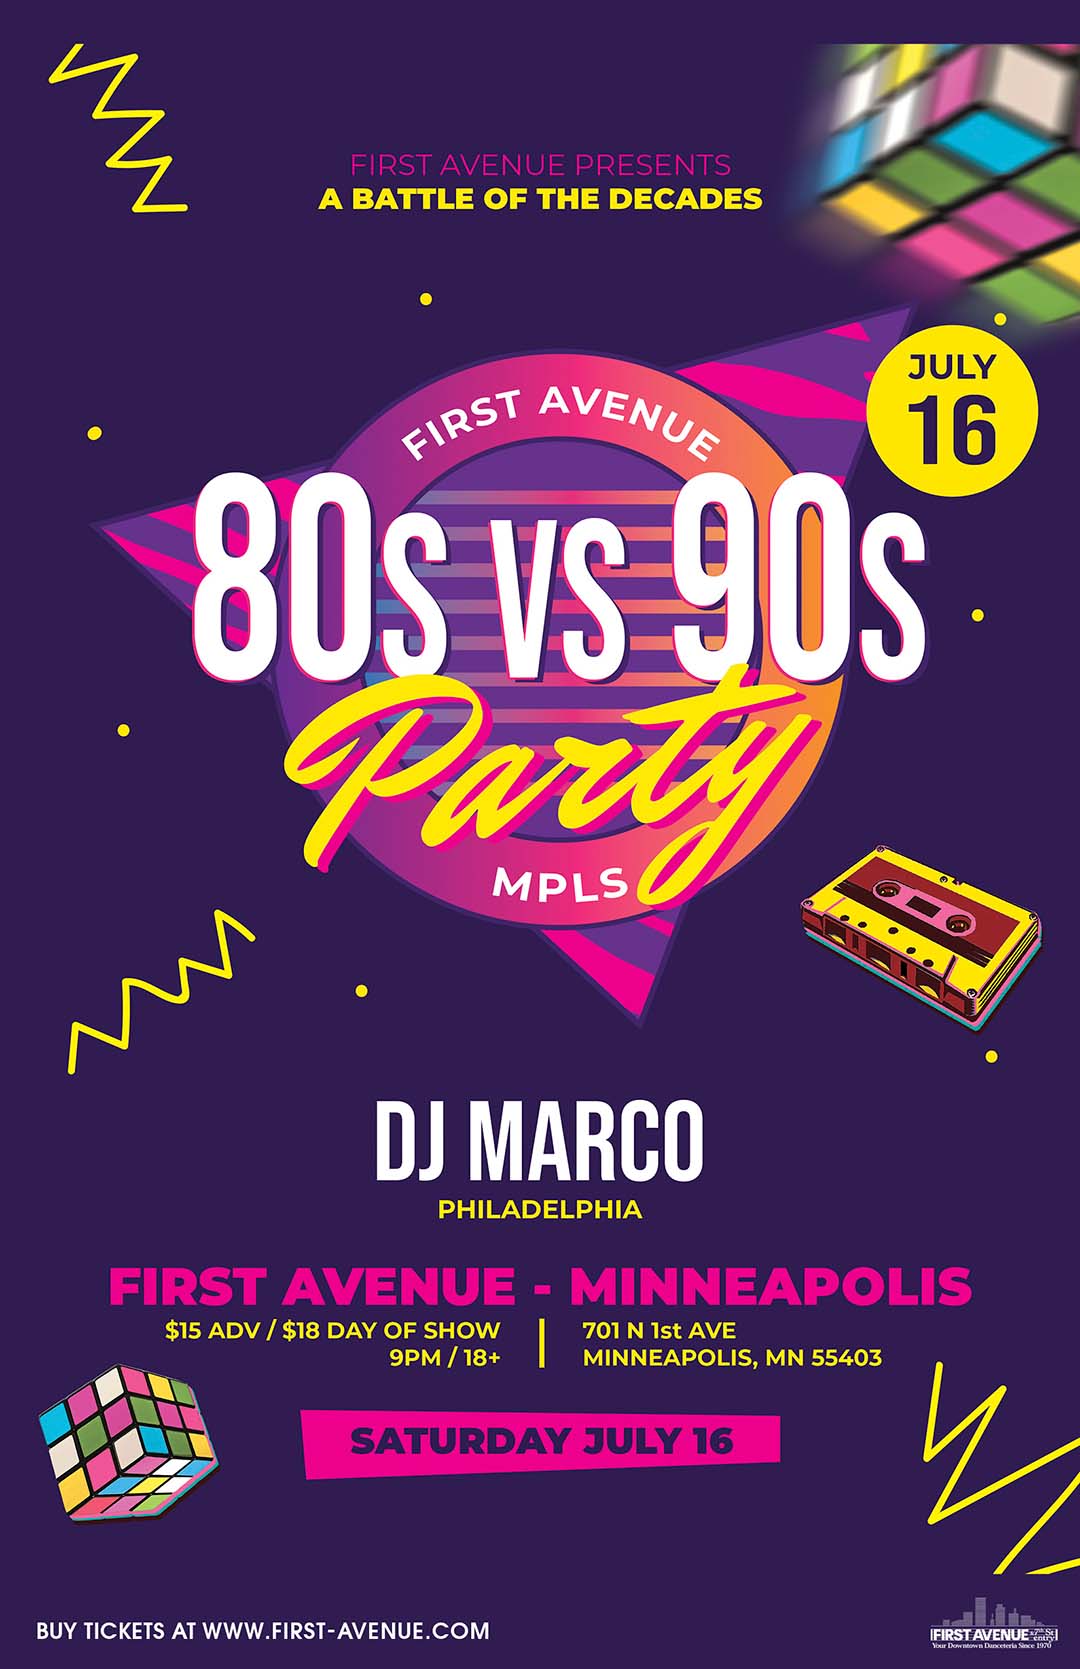 The 80s vs 90s Show